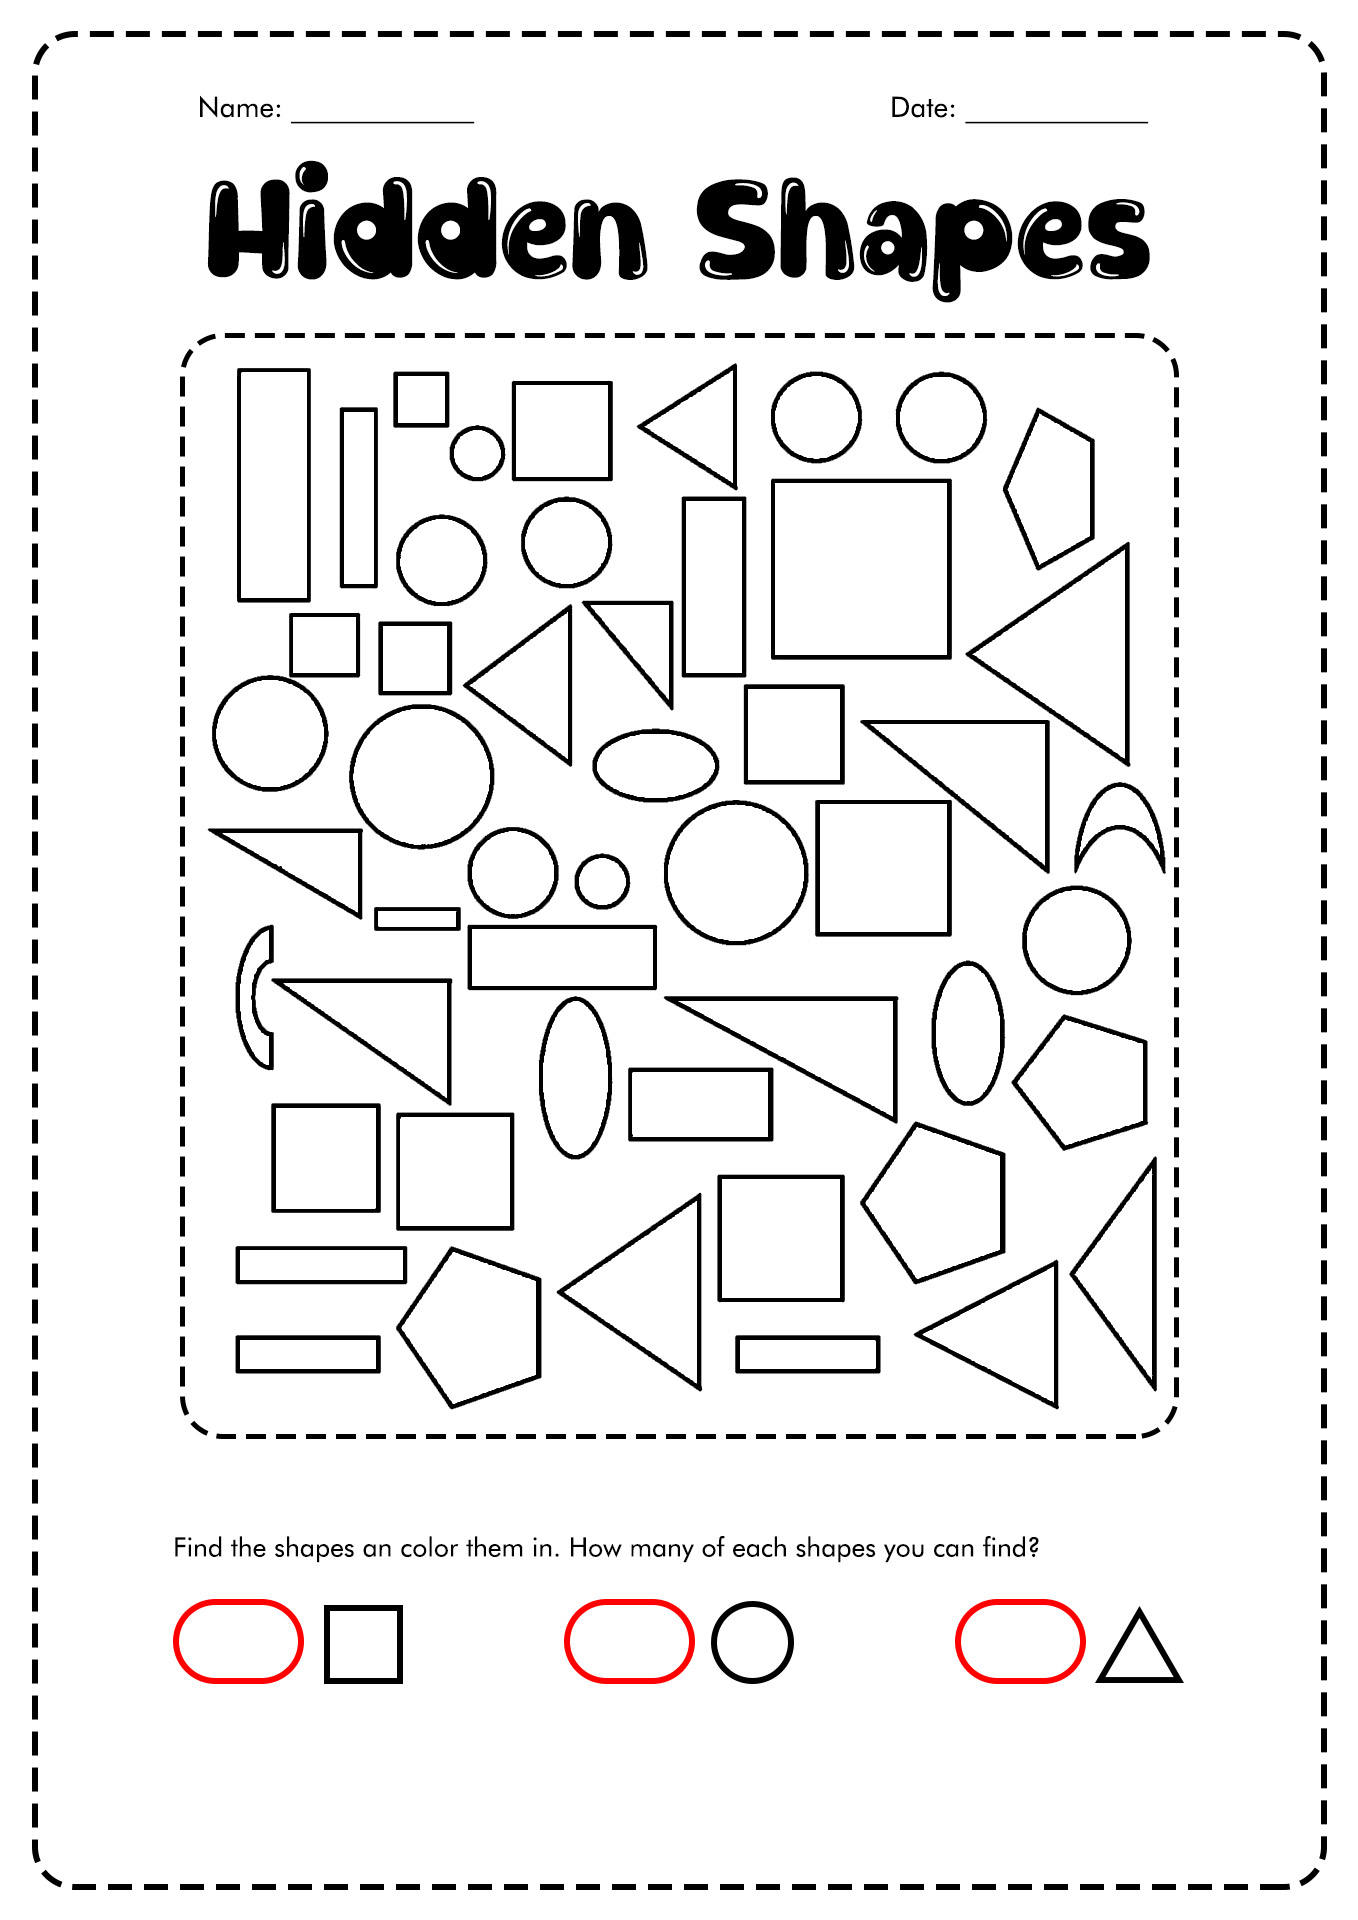 Hidden Shapes Worksheet for 1st Grade